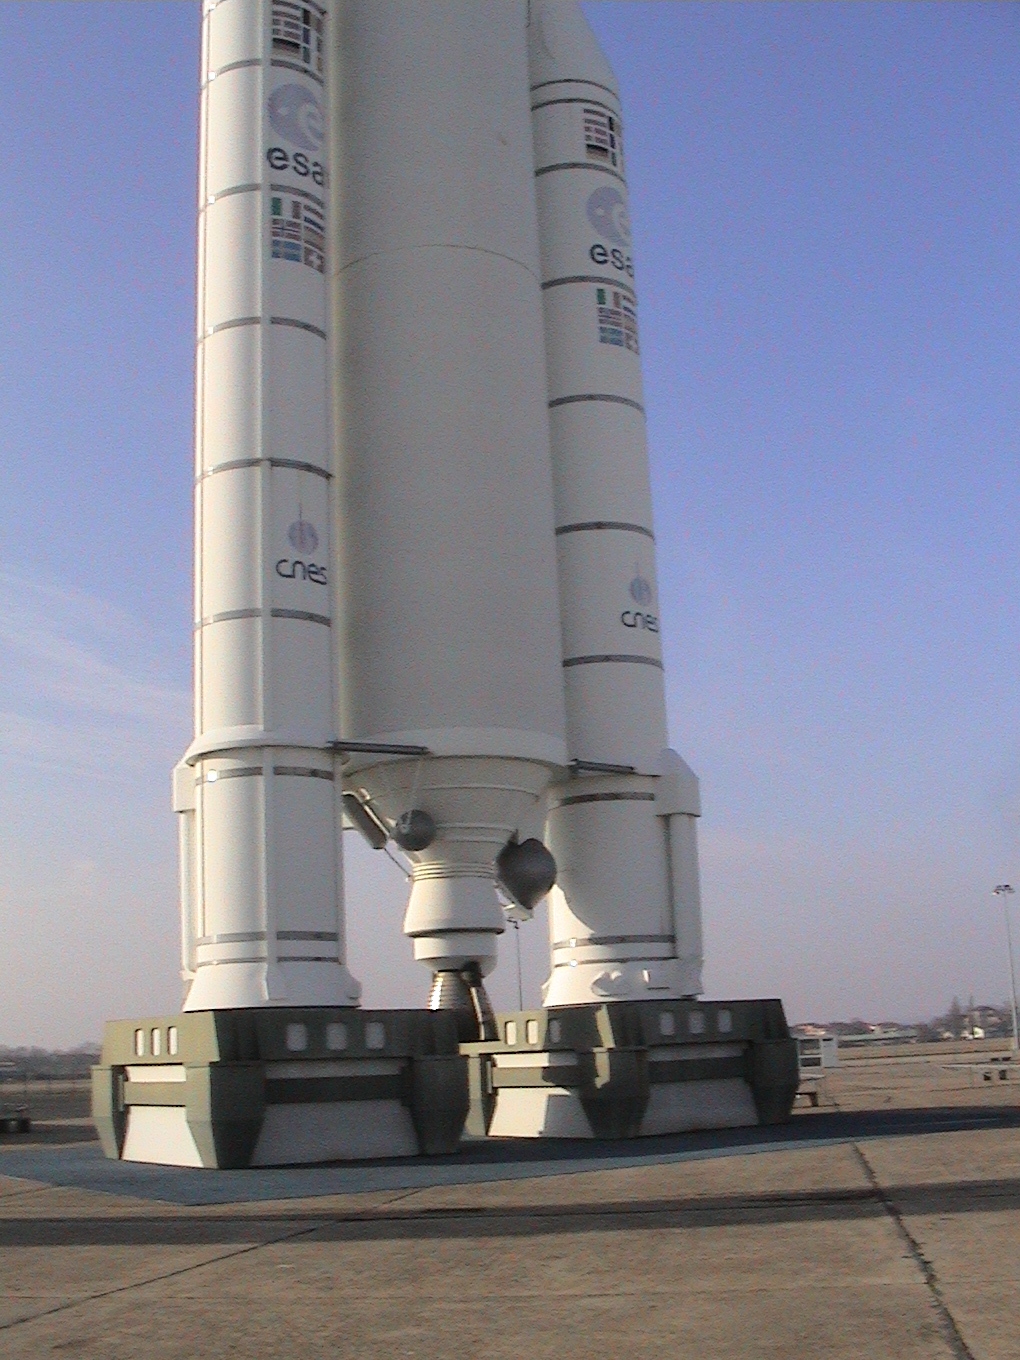 Photo 7 - La base d'Ariane 5